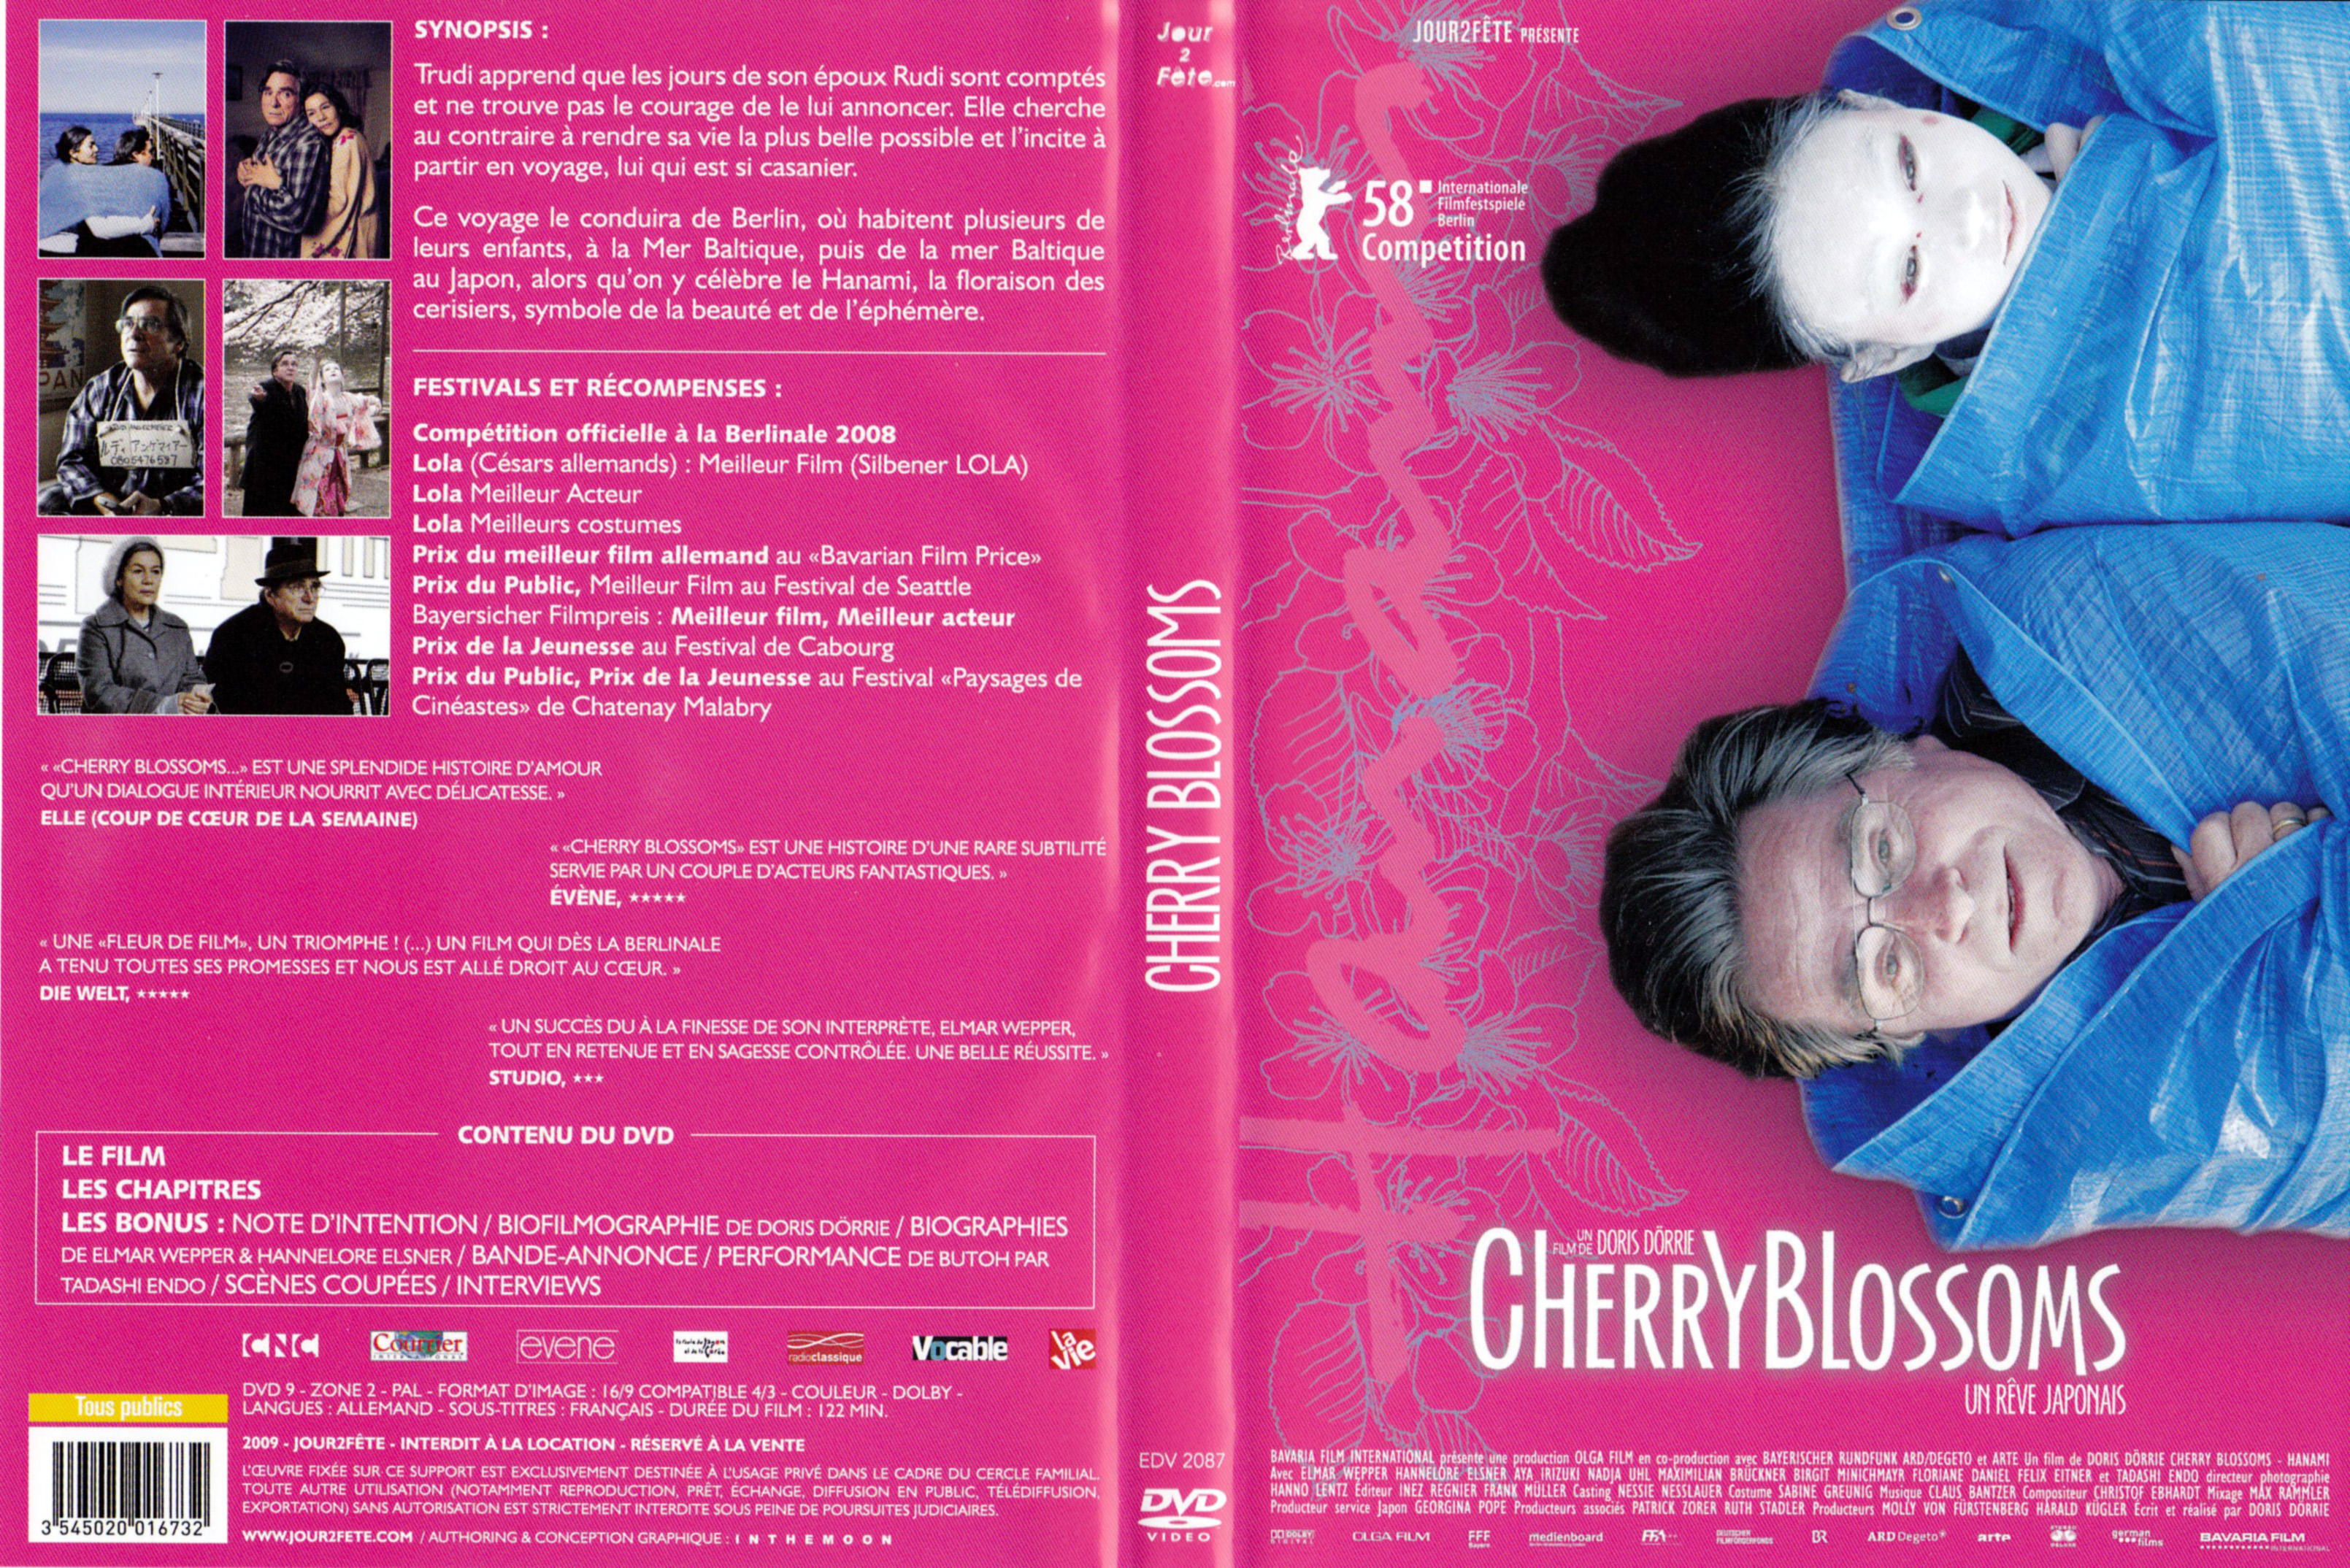 Jaquette DVD Cherry Blossoms